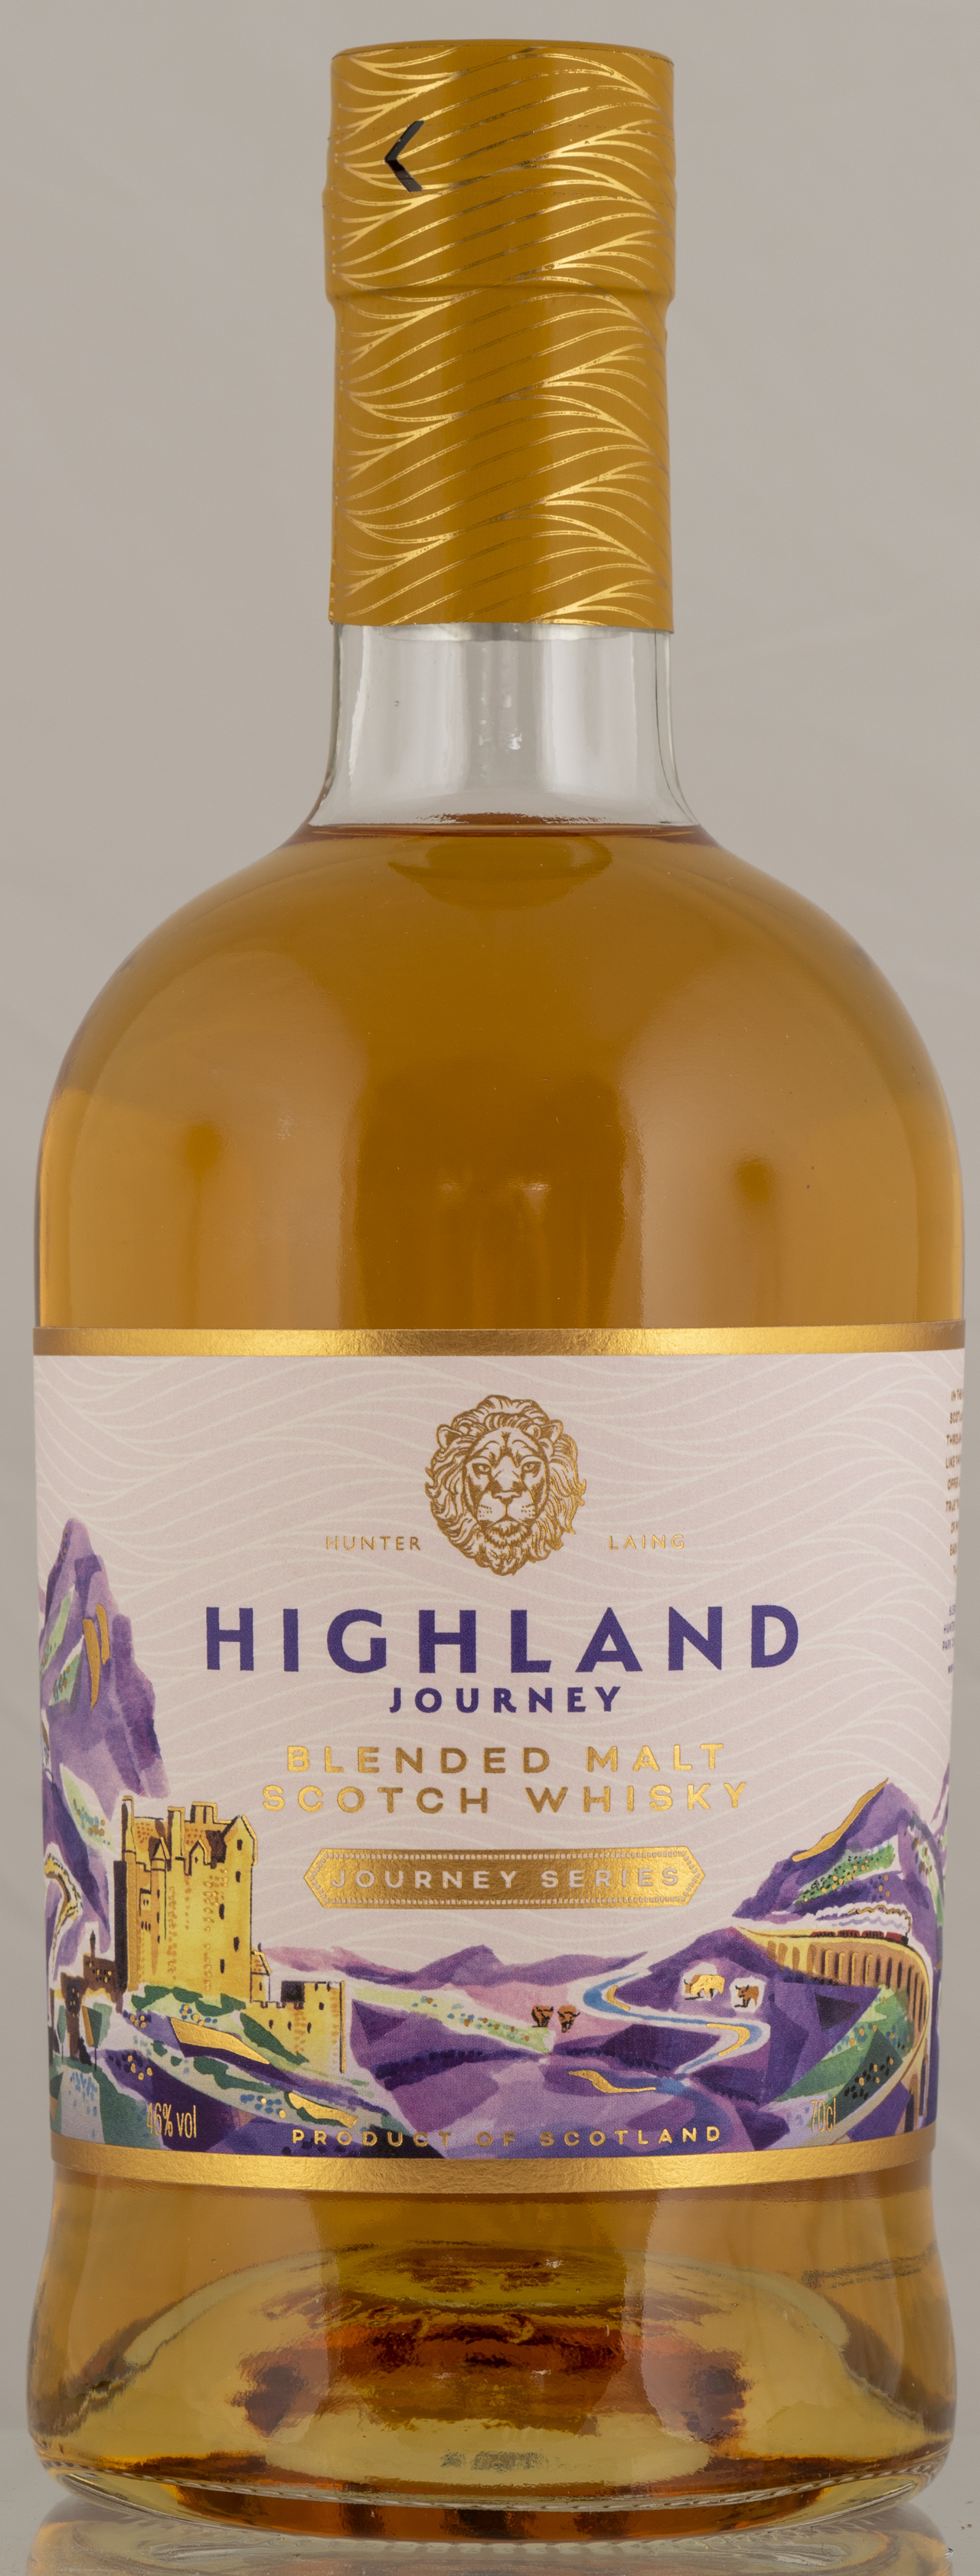 Billede: PHC_7330 - Hunter Laing Highland Journey Blended Malt - bottle front.jpg